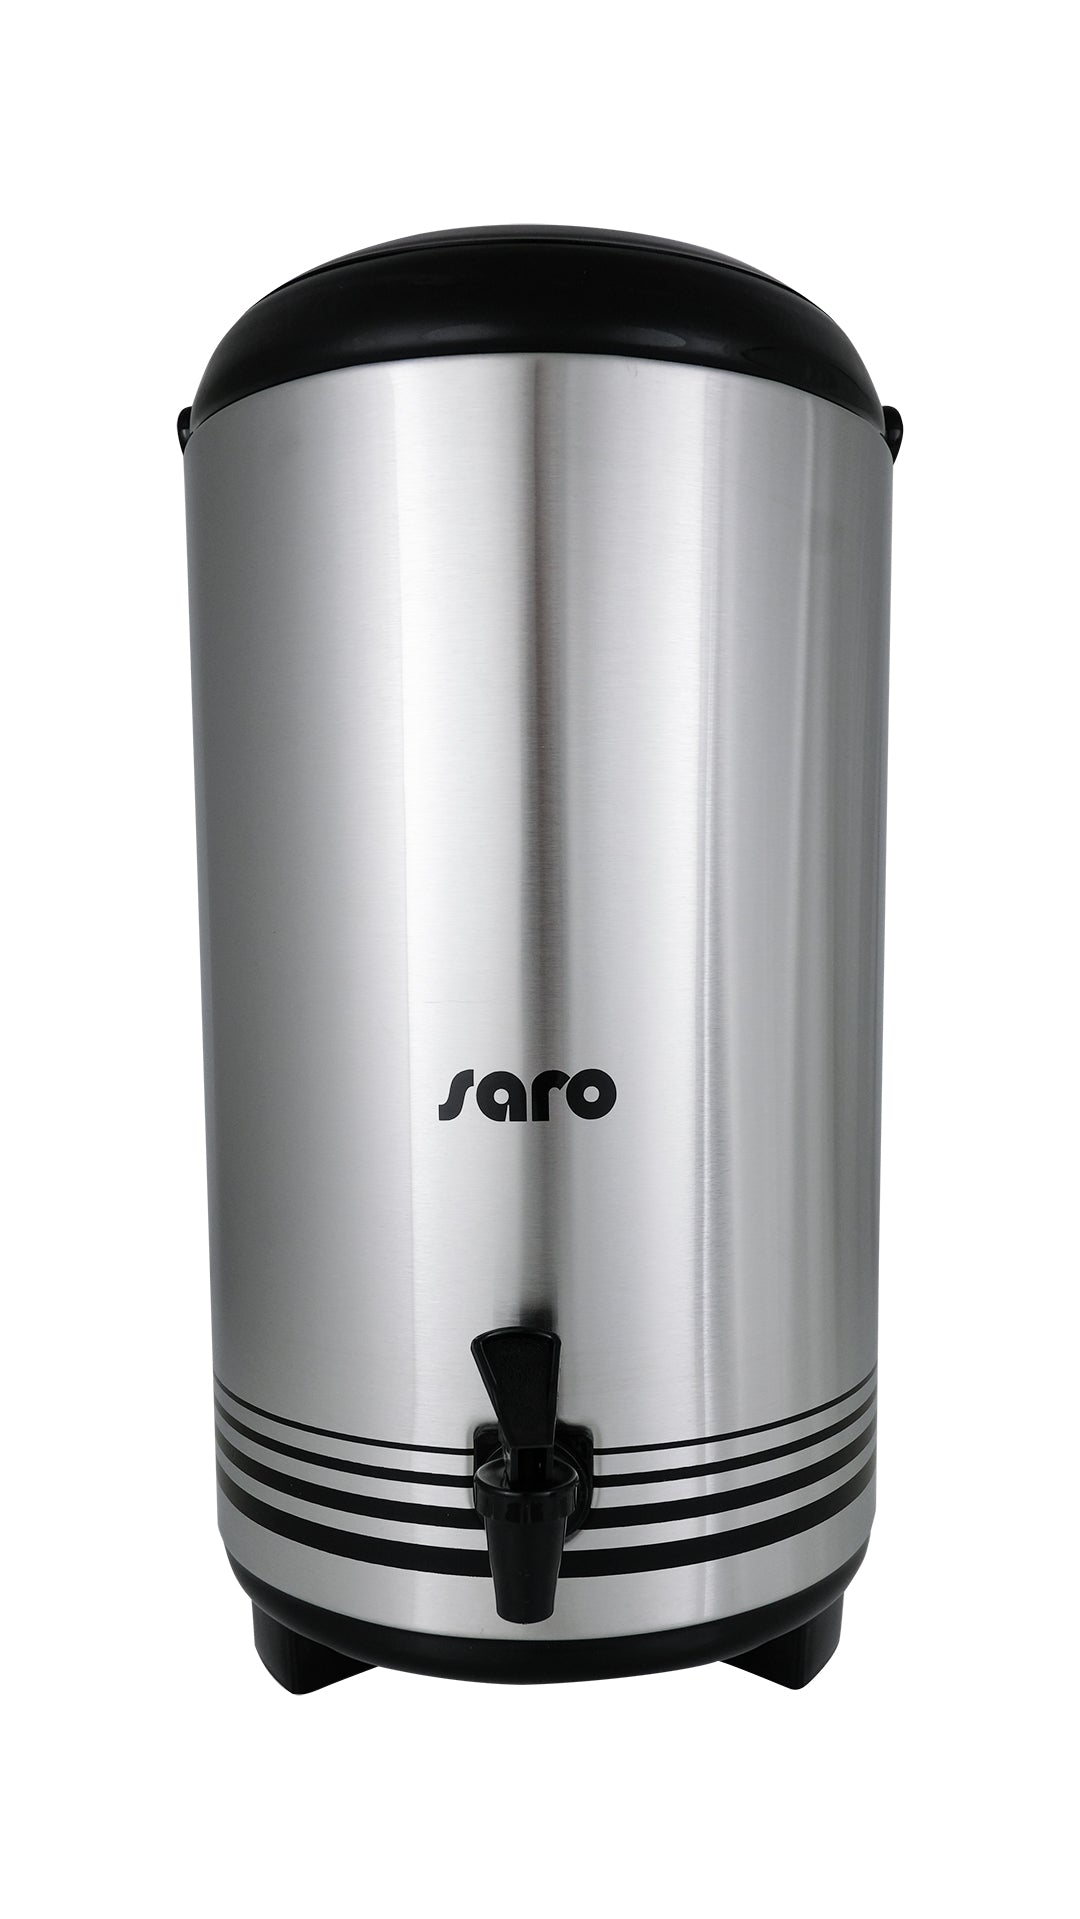 SARO Drikkevandsautomat 12 liter - model ISOD 12